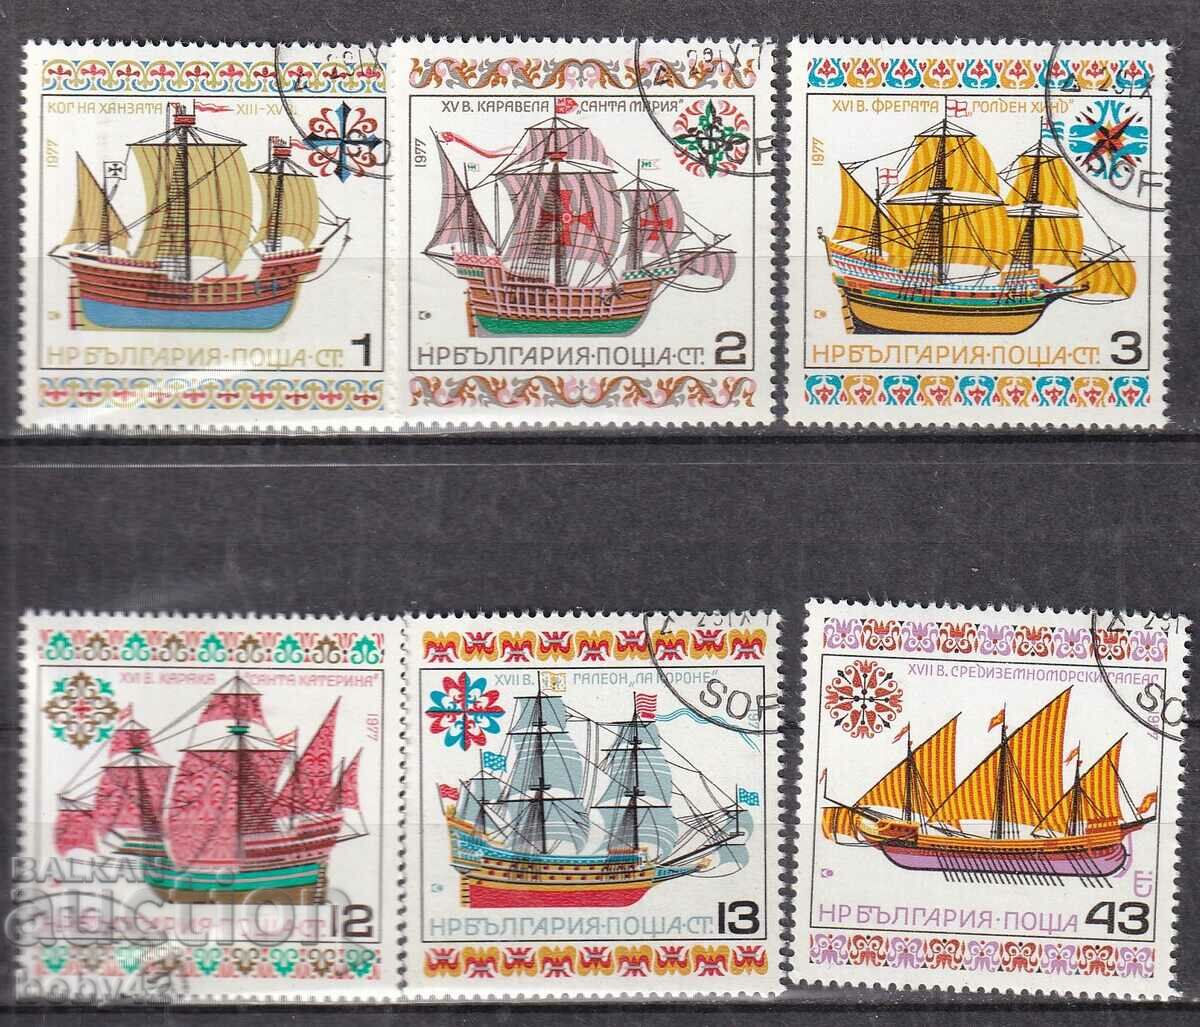 BK , BK 2681-2686 Machine stamped ships